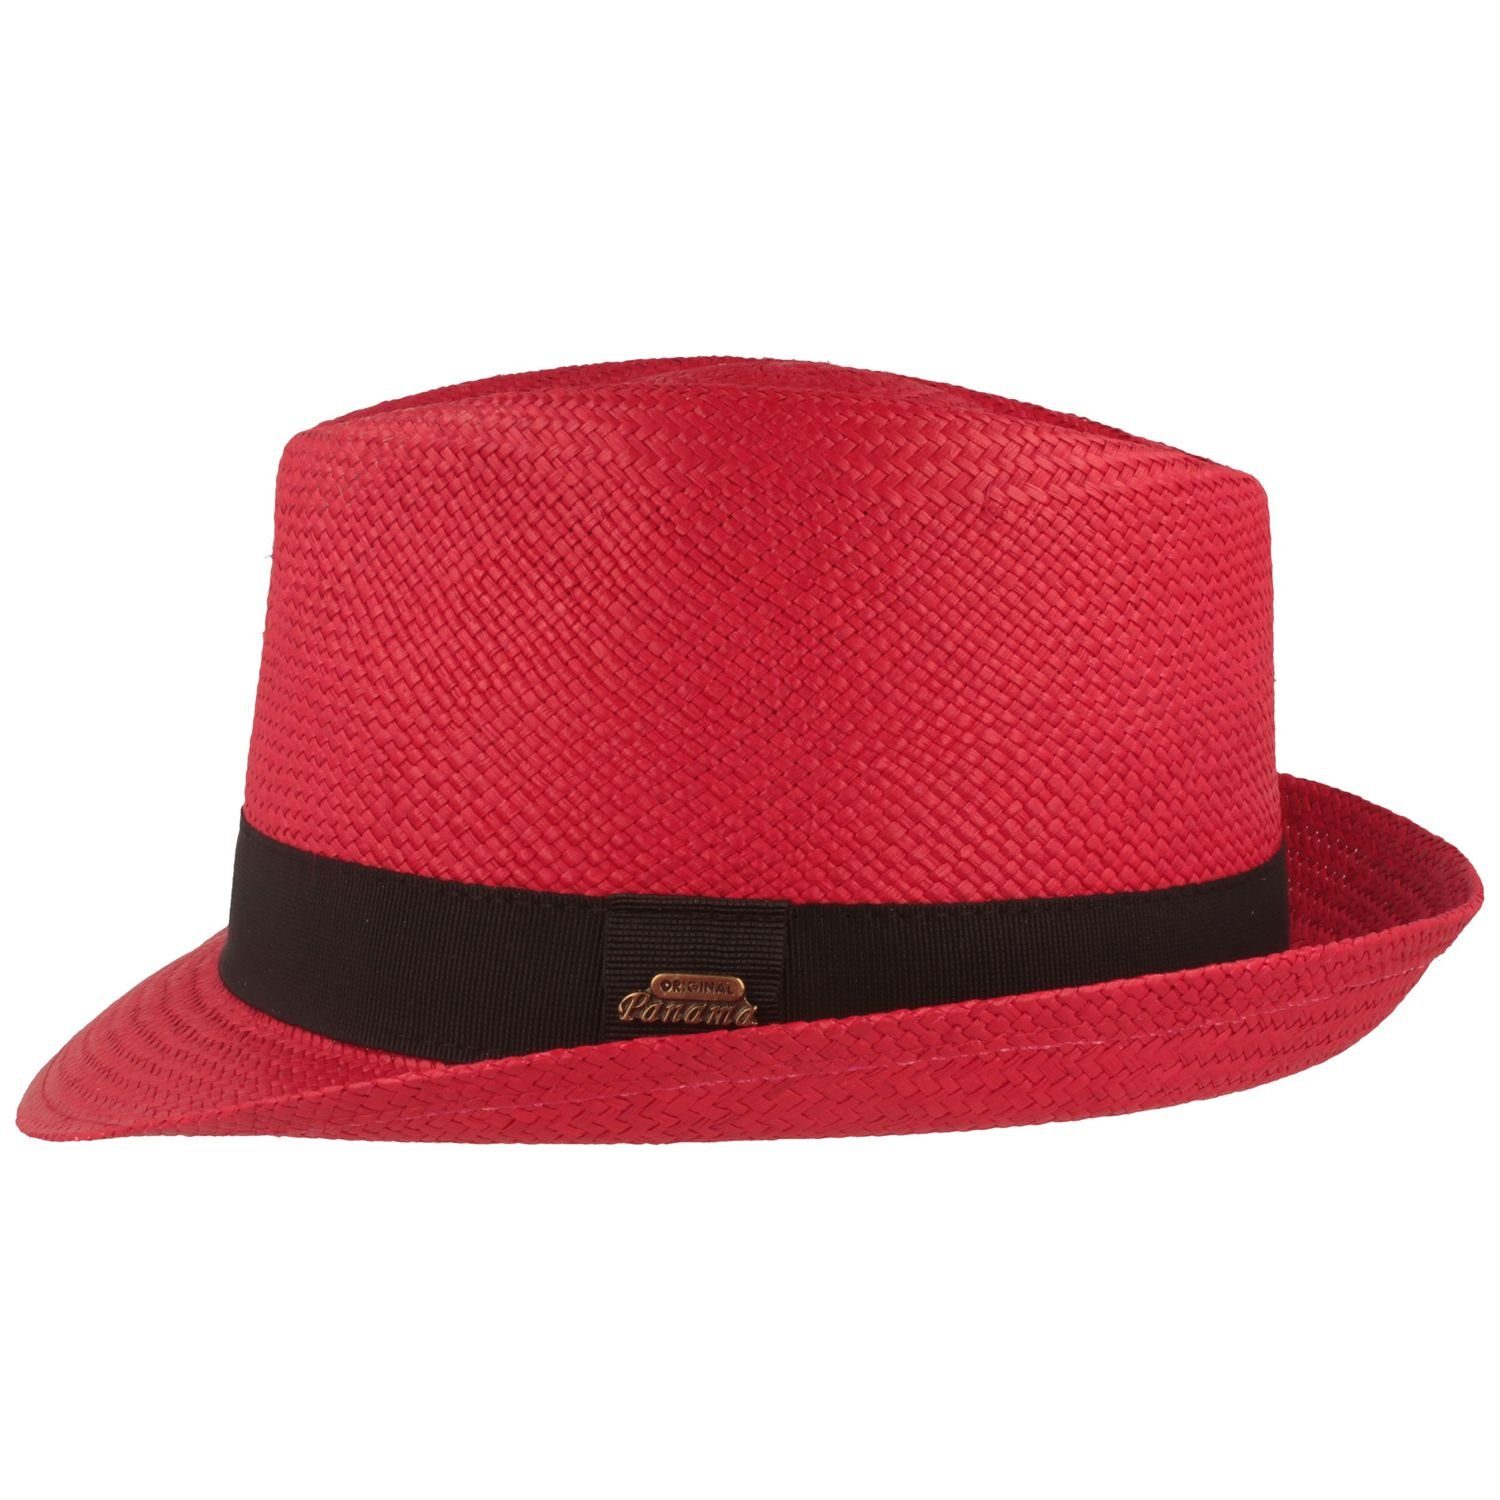 Strohhut Panama Breiter rot mit Trilby 50+ original Hut UV-Schutz